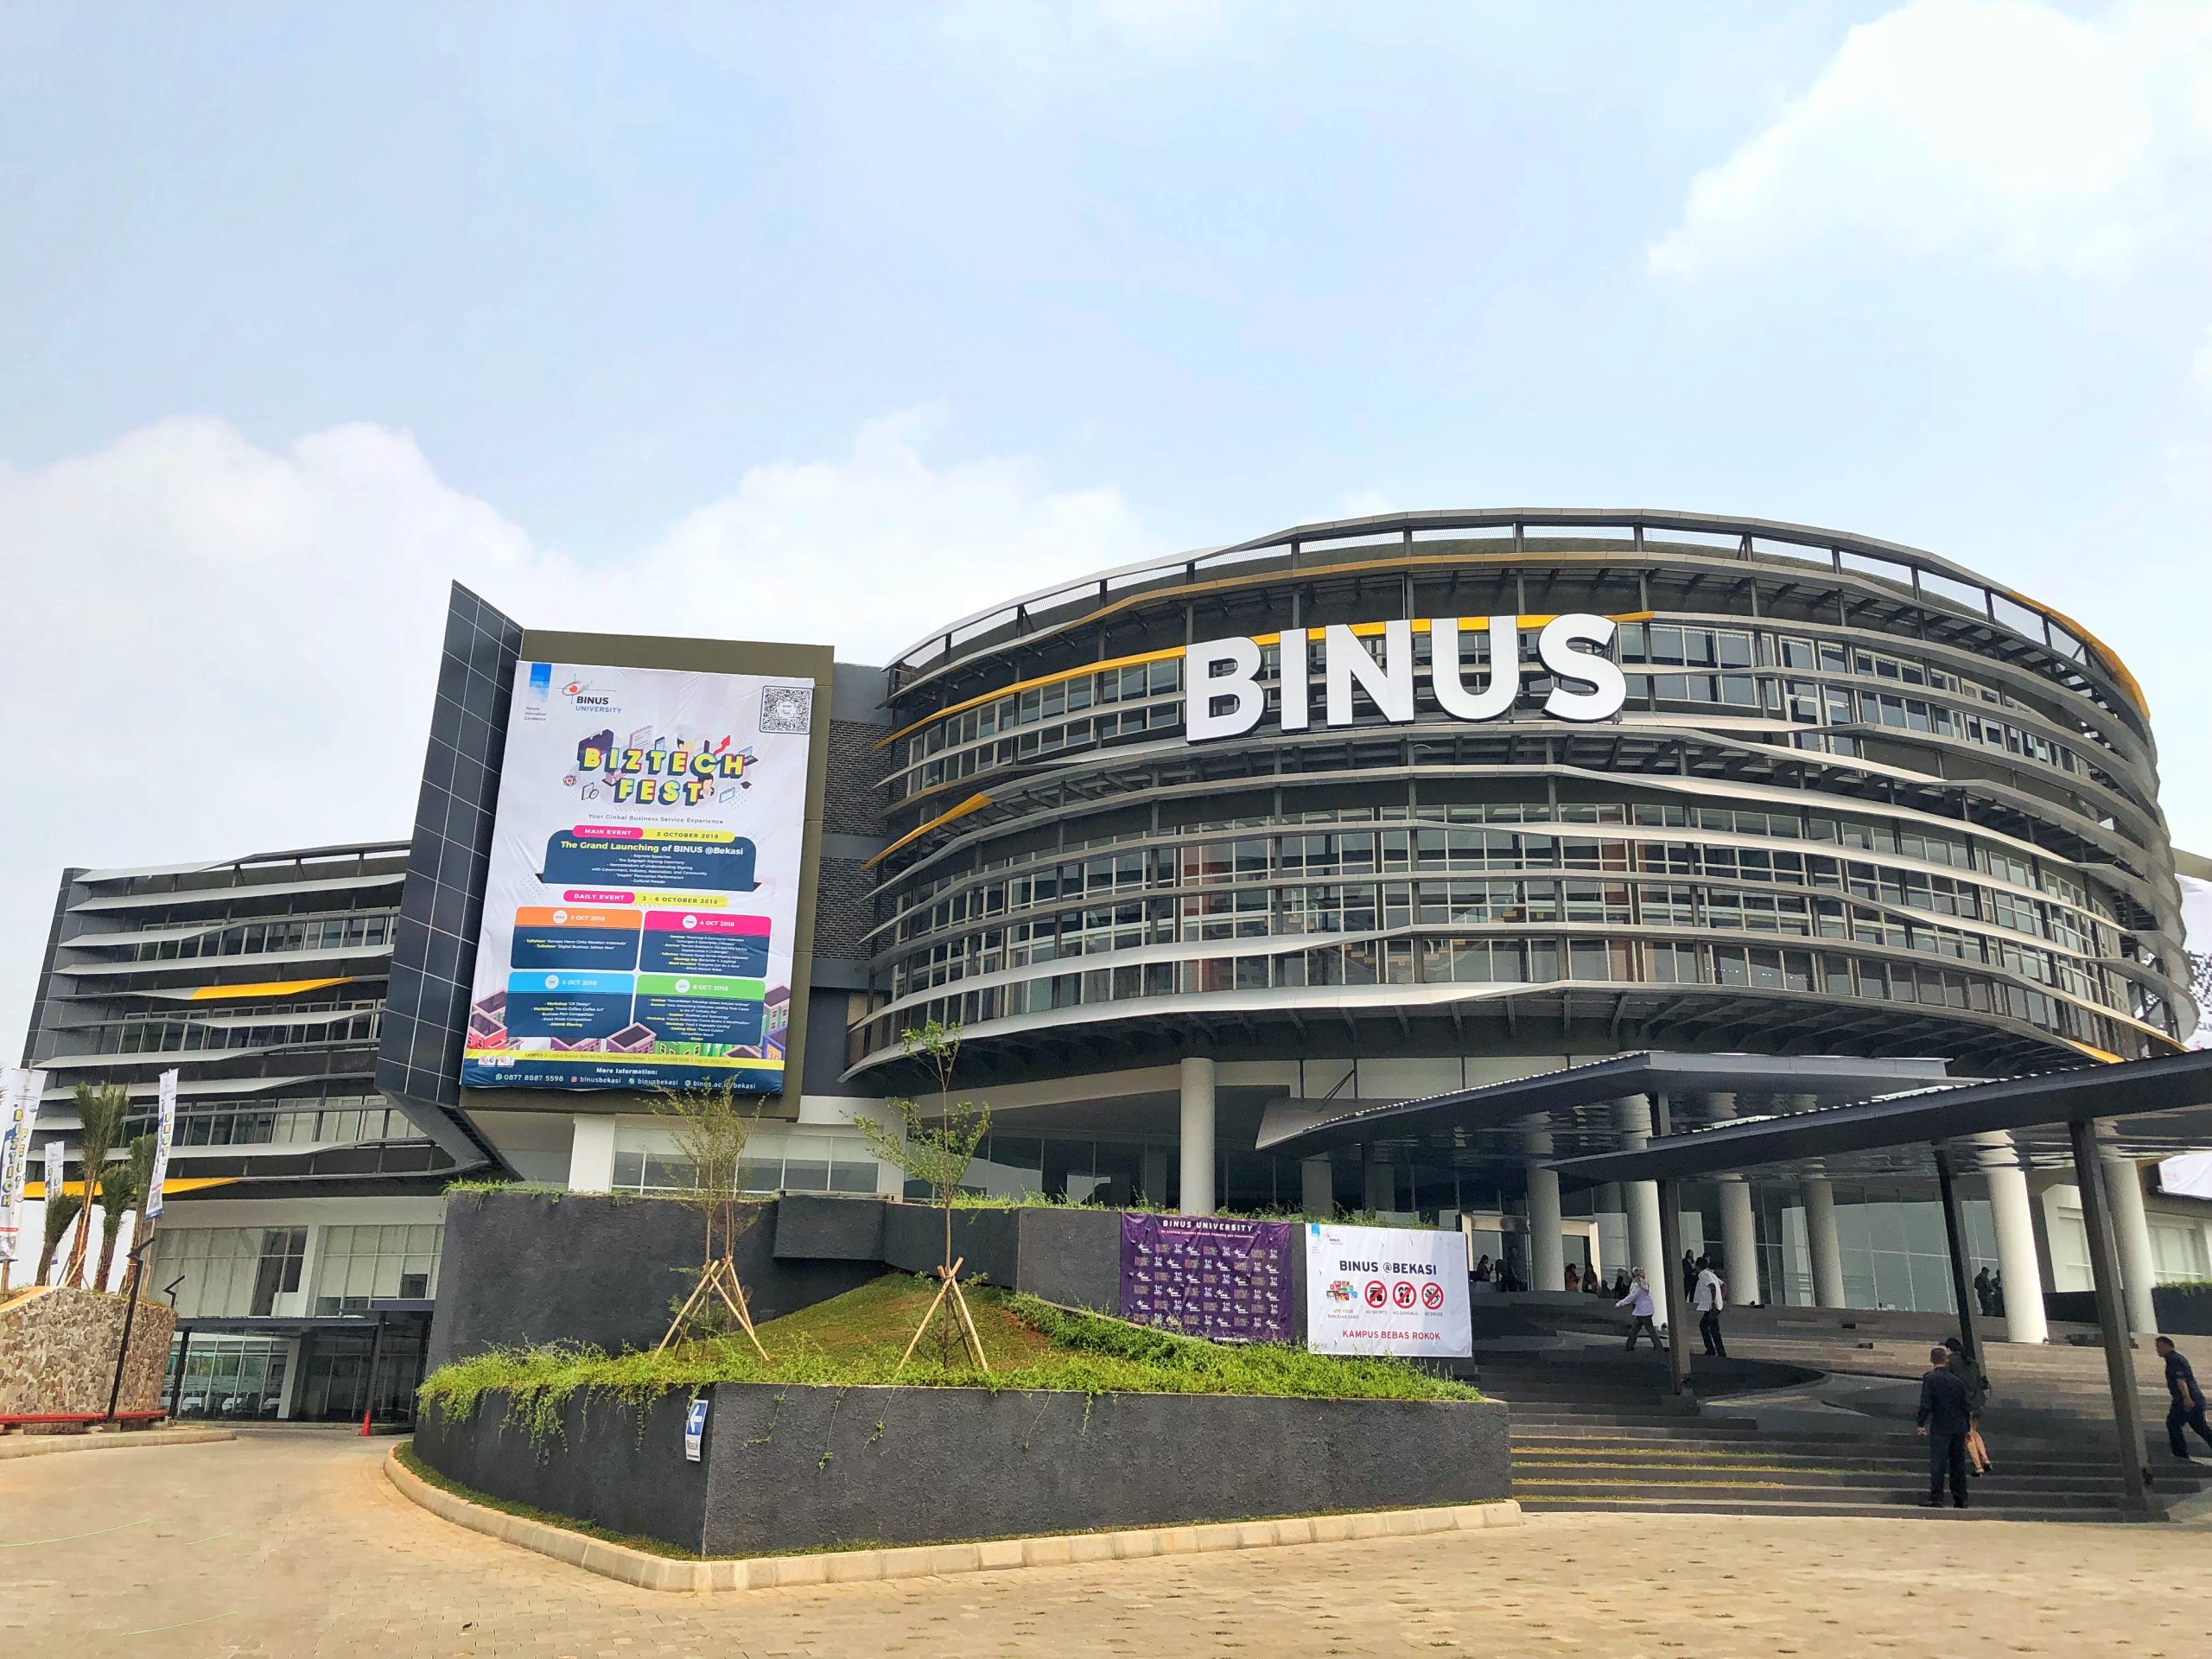 Universitas Bina Nusantara